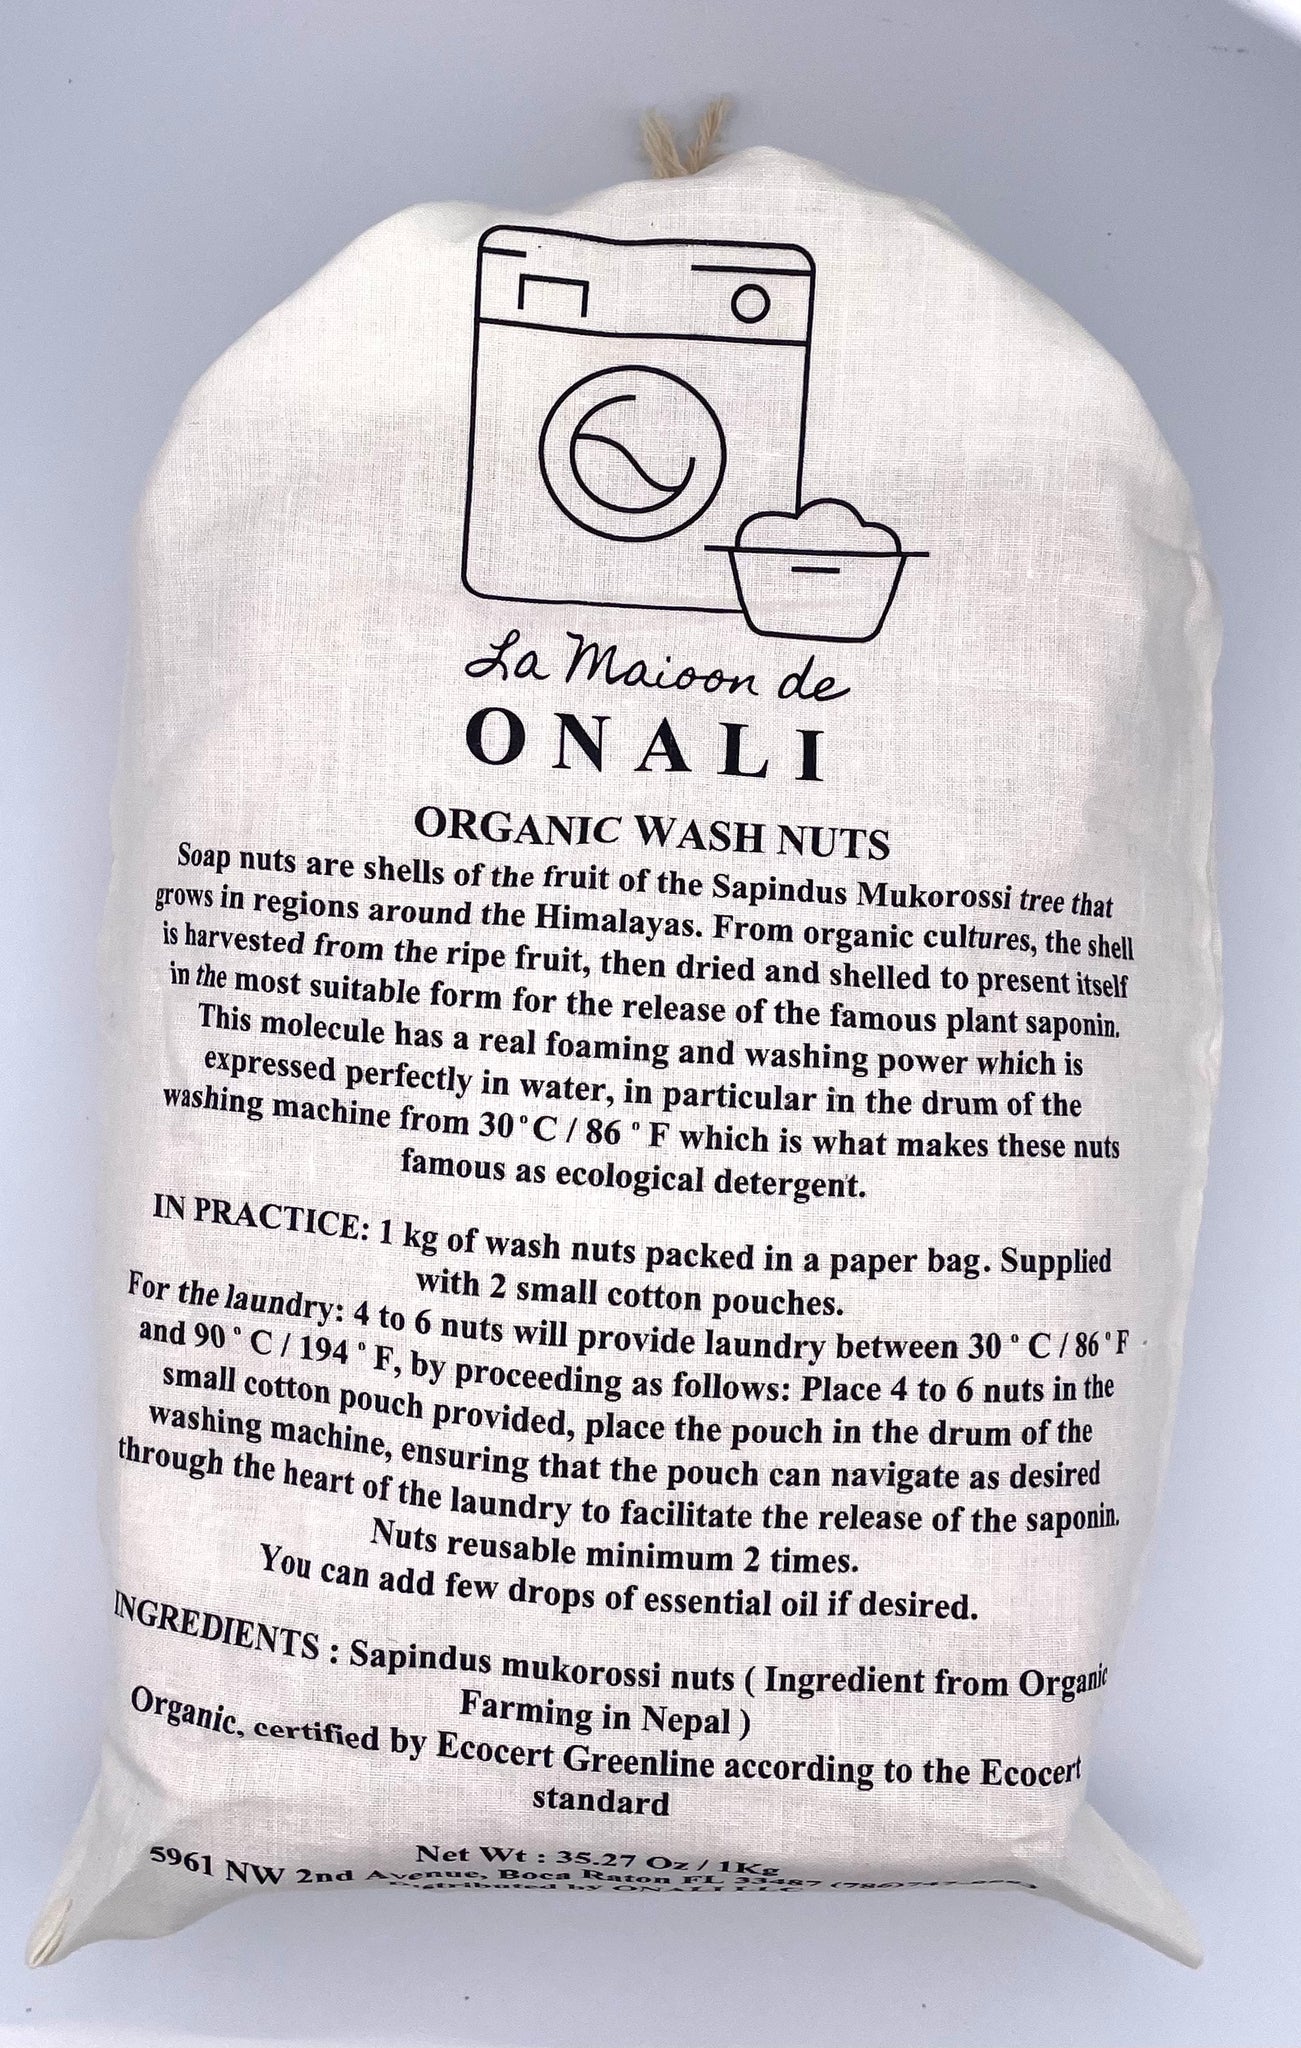 Organic Laundry Wash Nuts